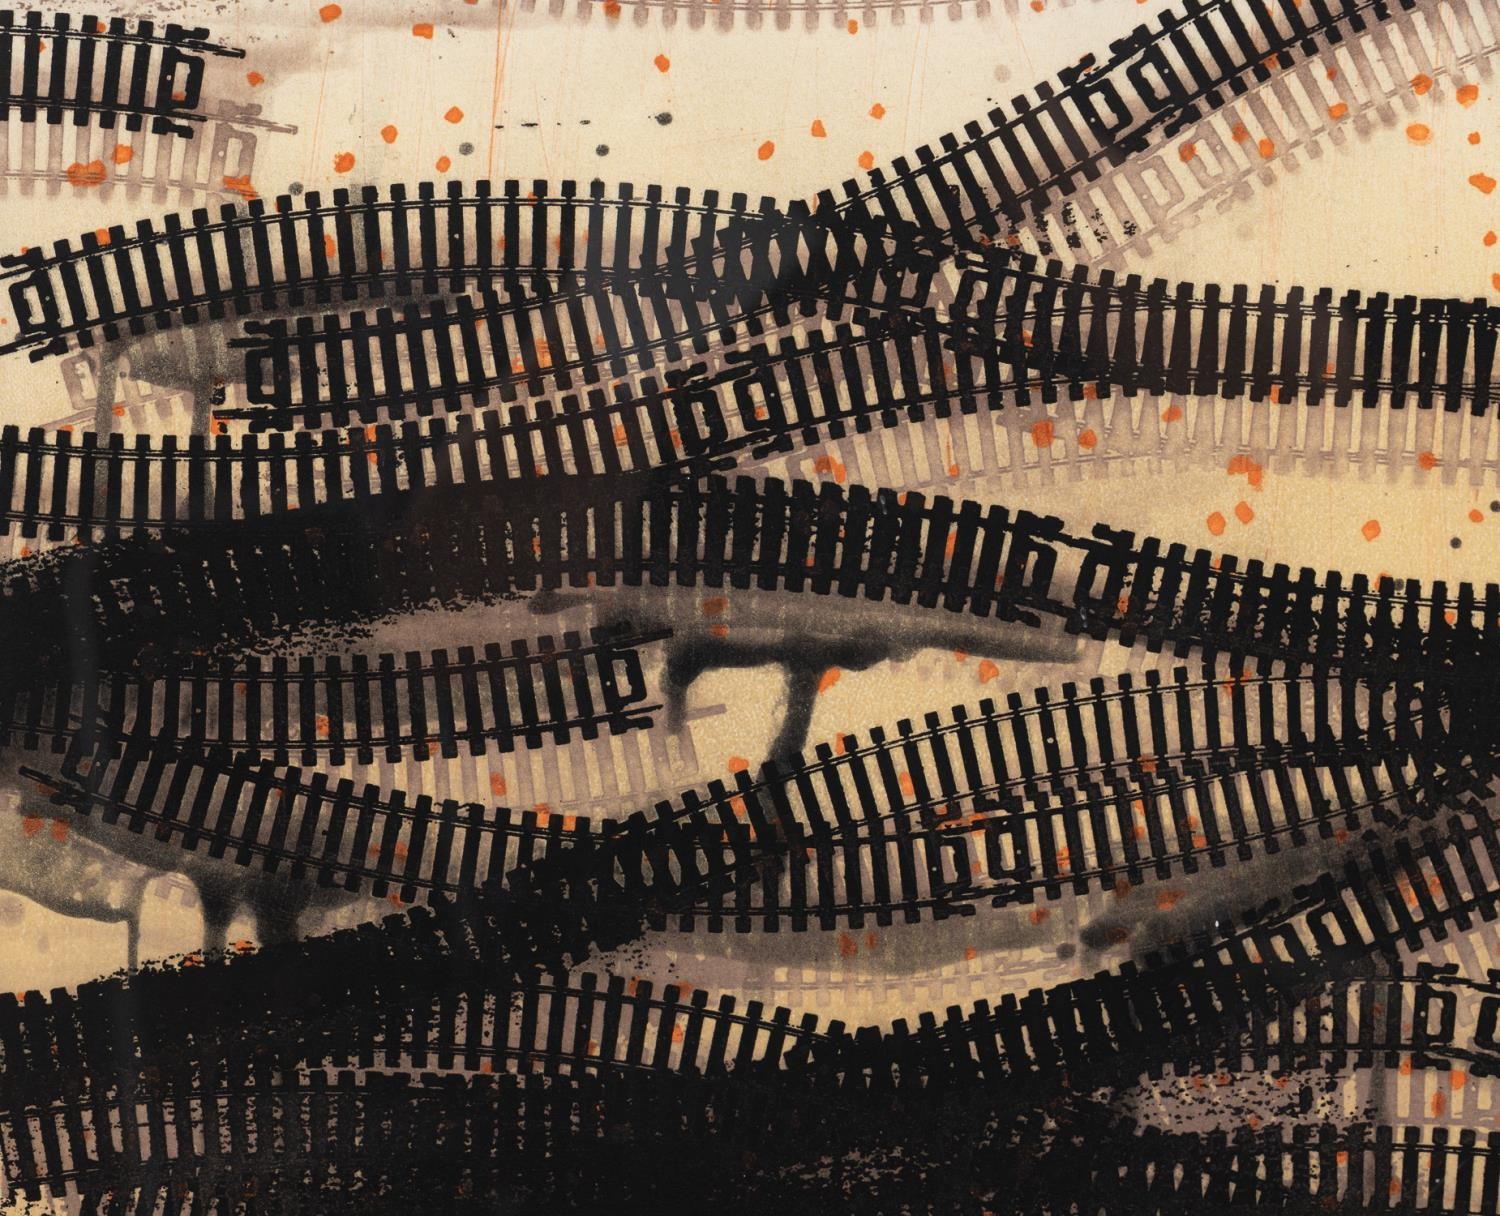 Artwork by Deborah Oropallo, DEBORAH OROPALLO, "RAILING" ETCHING, 1998, Made of ETCHING, 1998, Deborah Oropallo (American, b  1954   )  "Railing"  1998, etching on paper